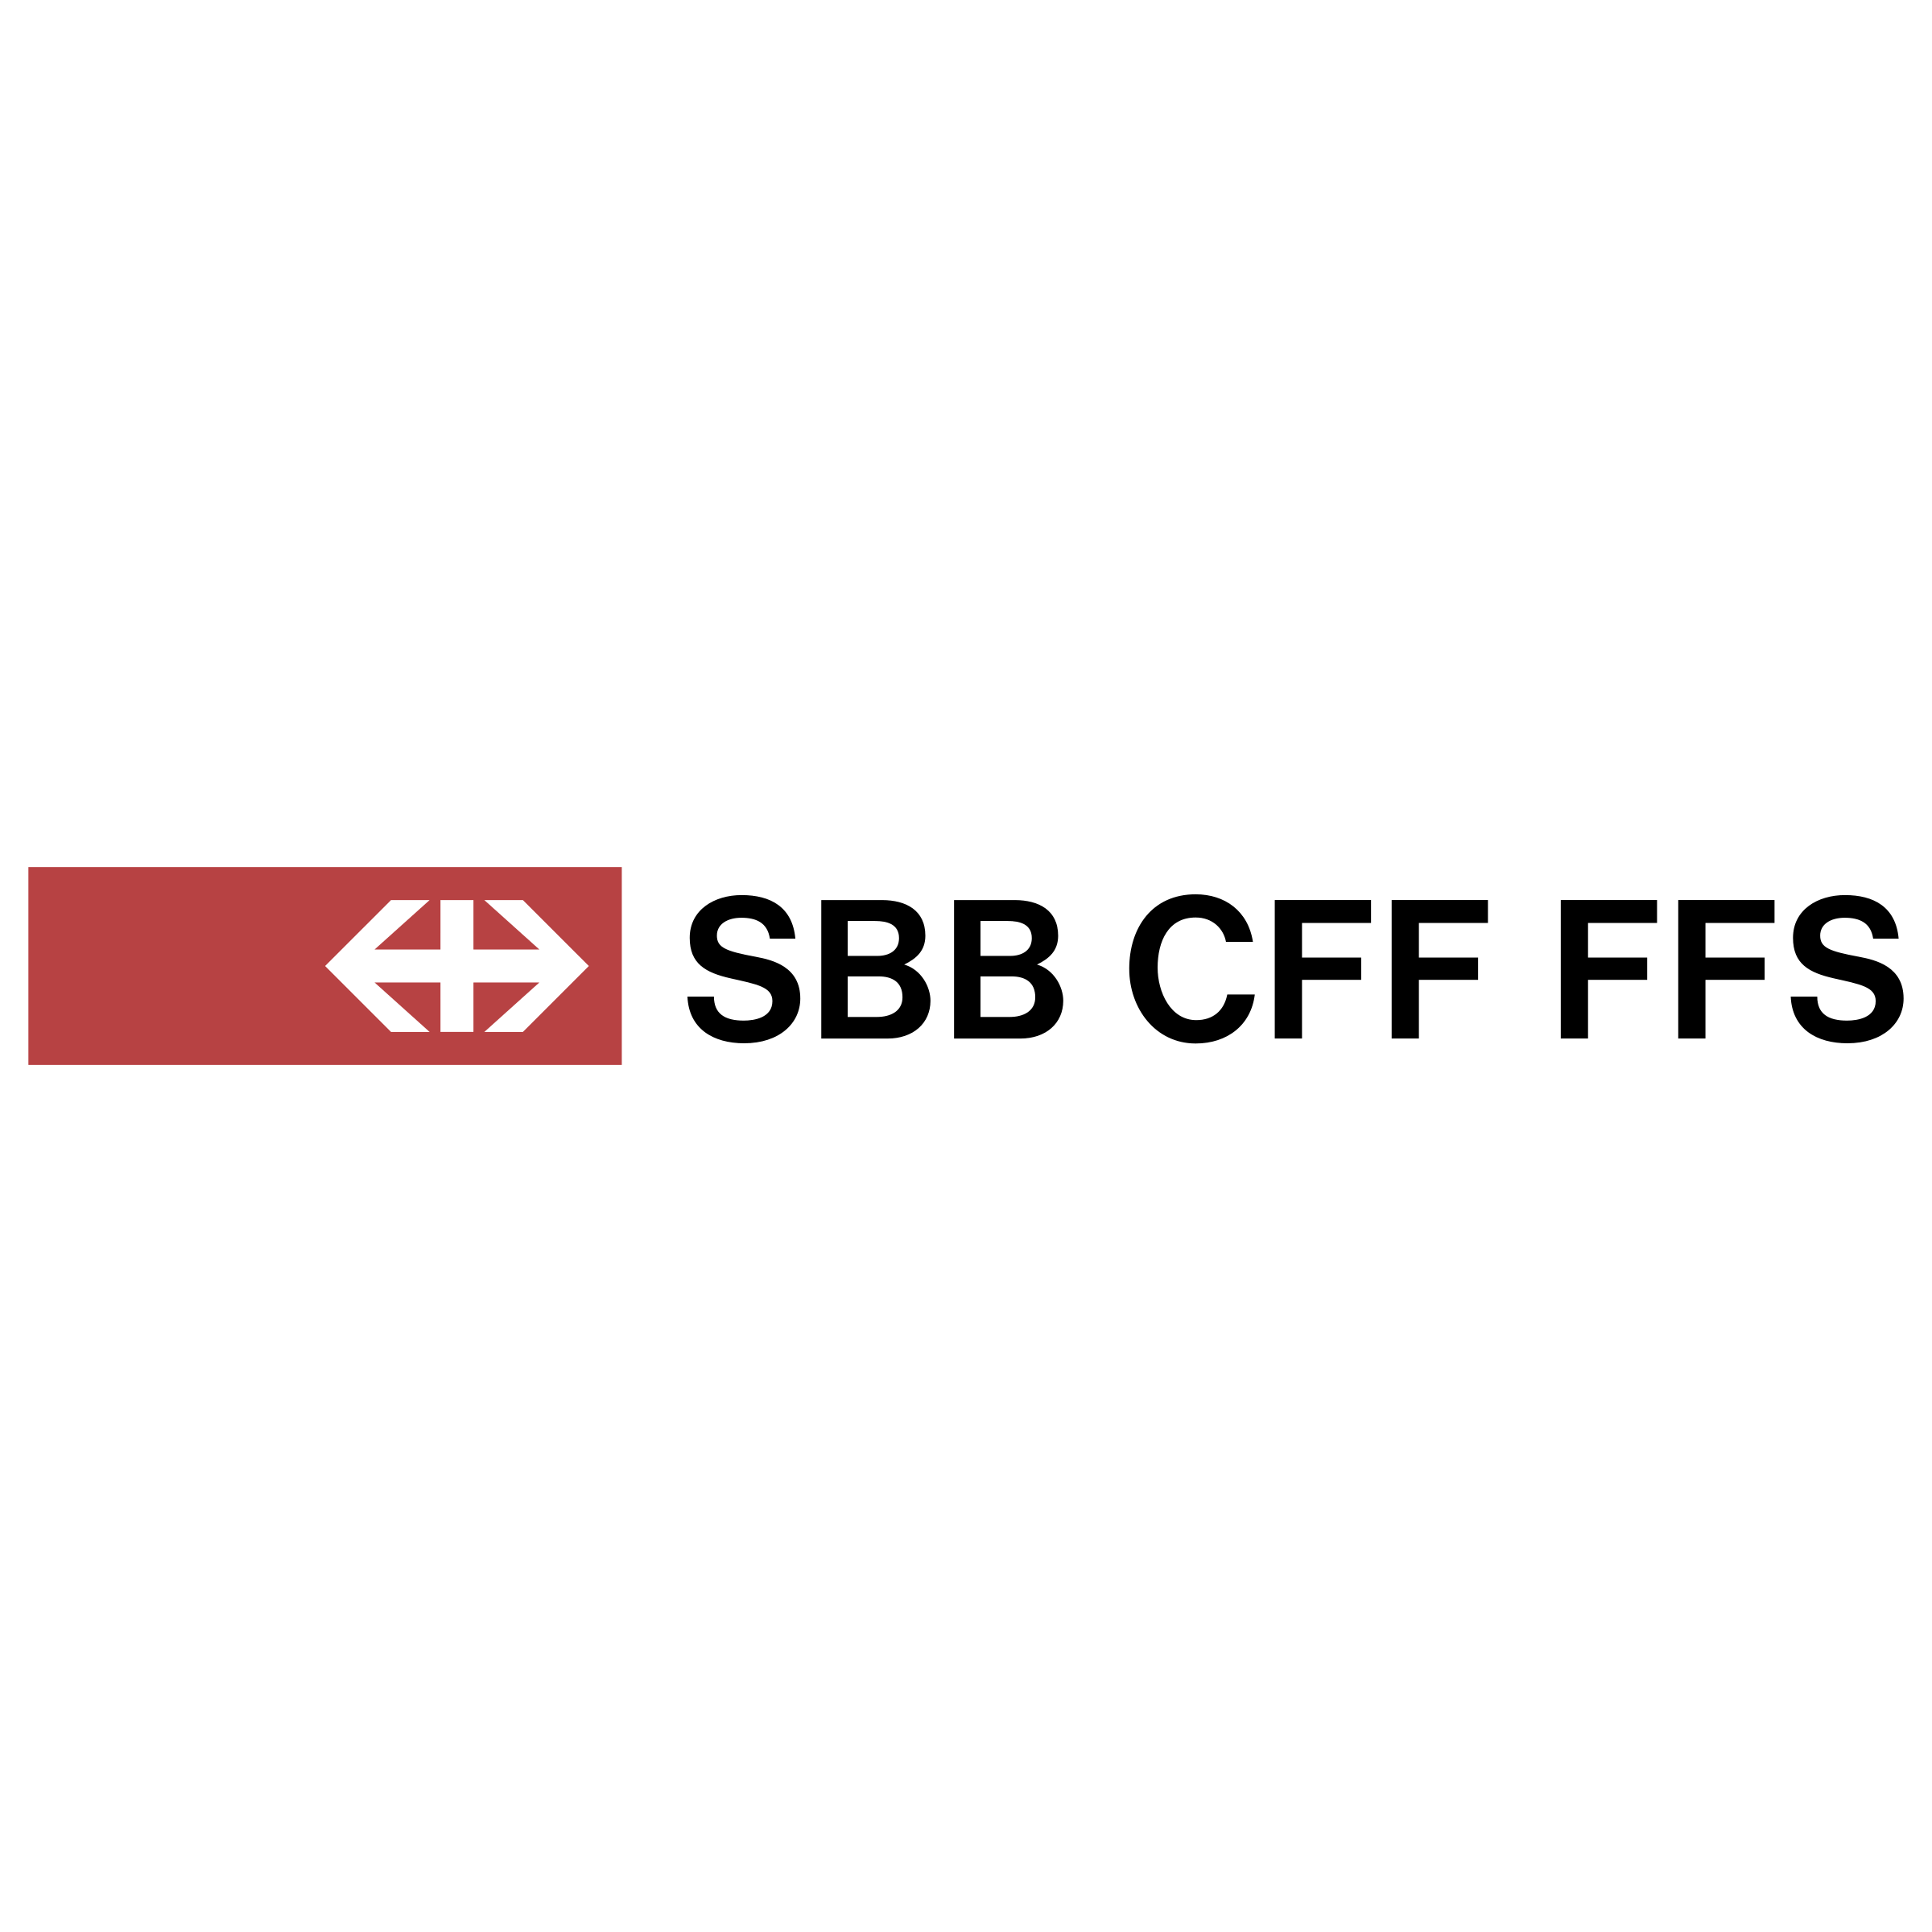 CFF Logo - SBB CFF FFS Logo PNG Transparent & SVG Vector - Freebie Supply